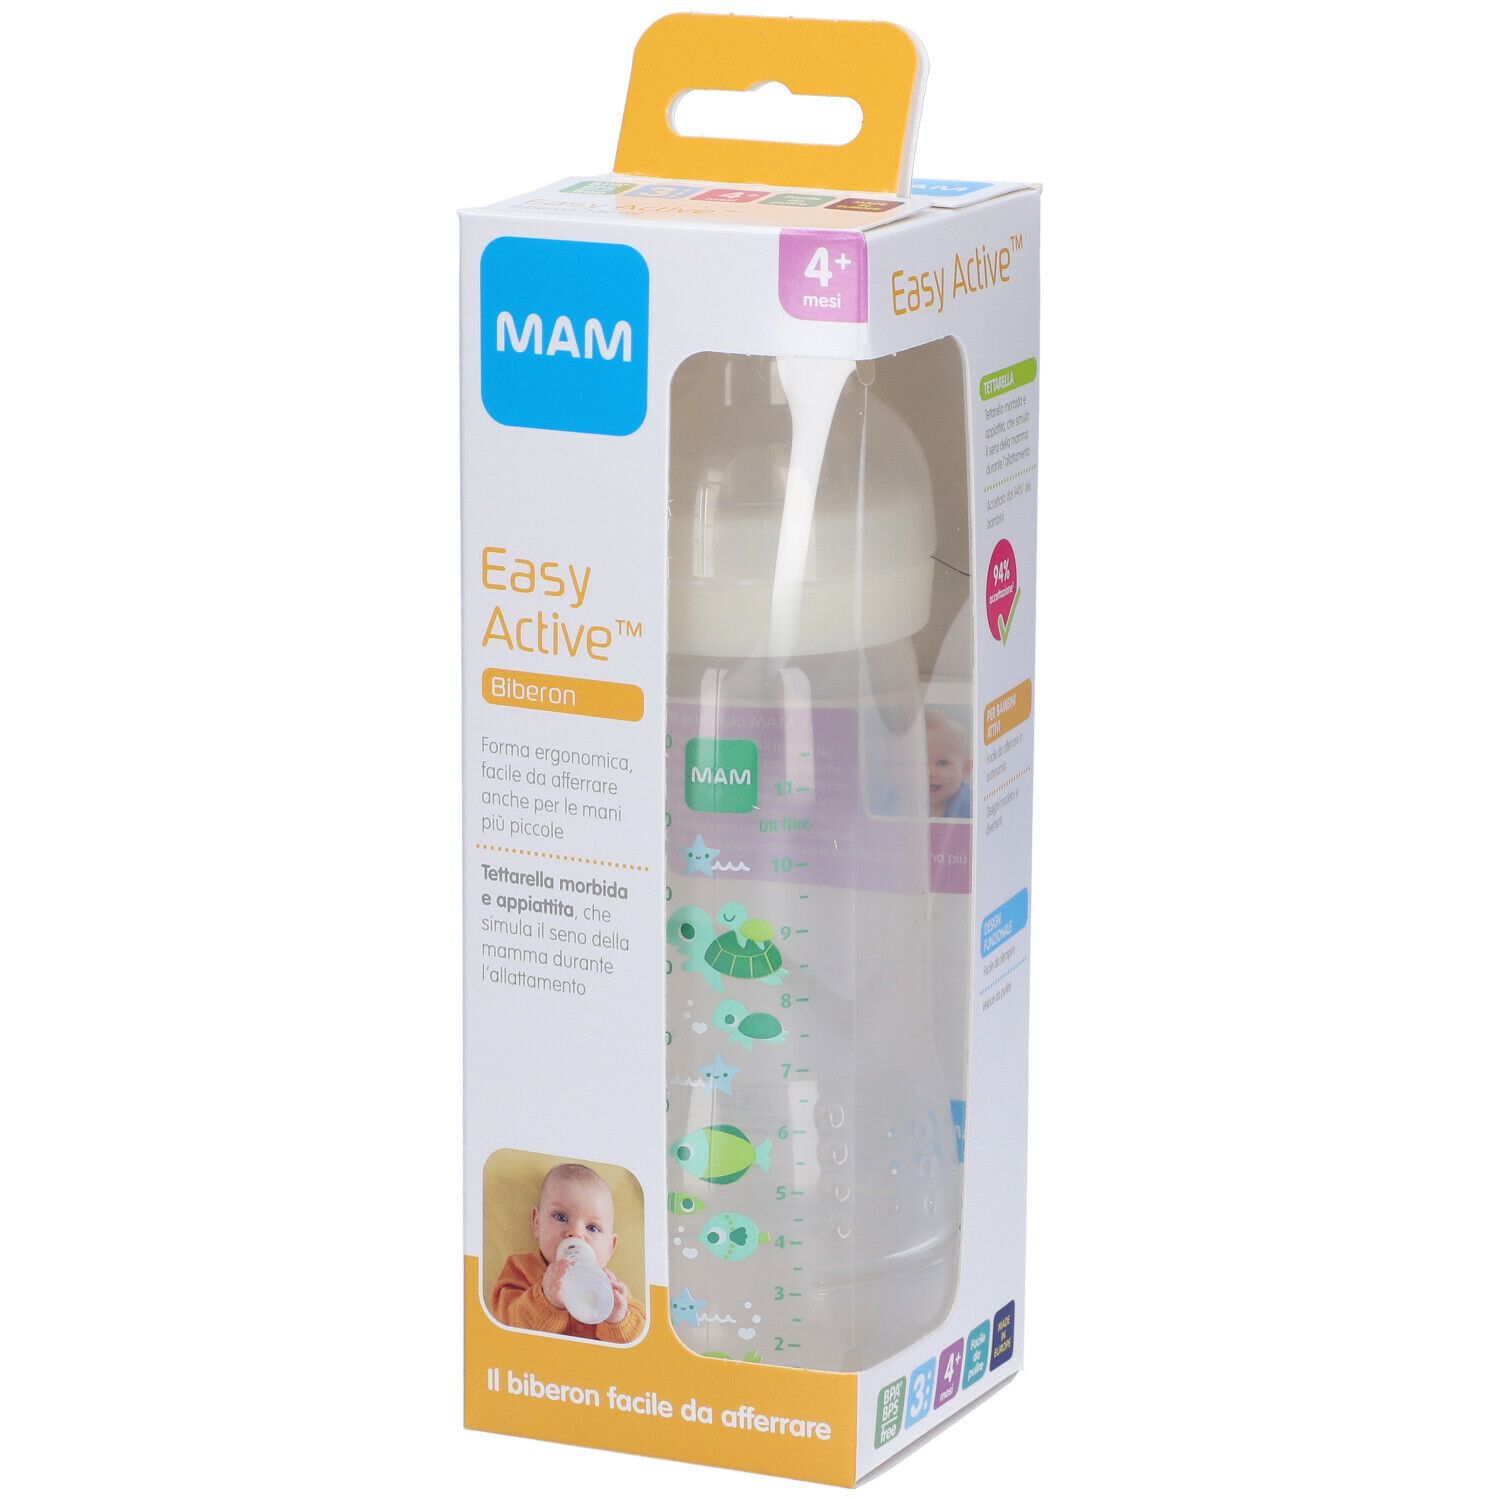 MAM Easy Active™ Babyflasche 330ml